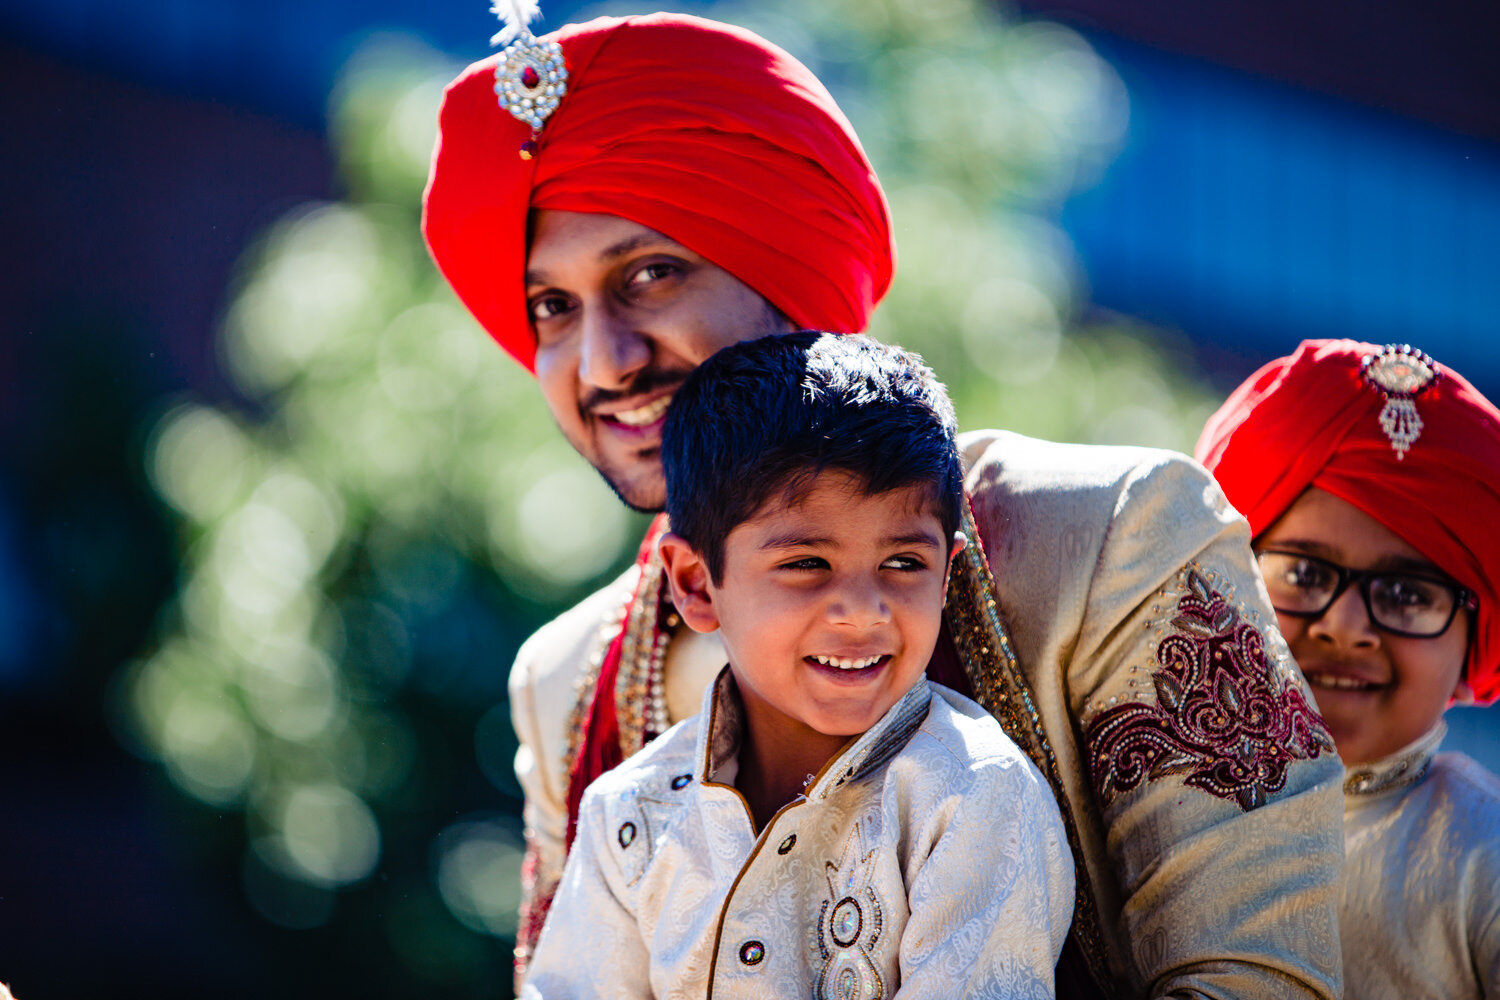  Colorado Indian Wedding photographer, JMGant Photography, capturing colorful, artistic photos. 